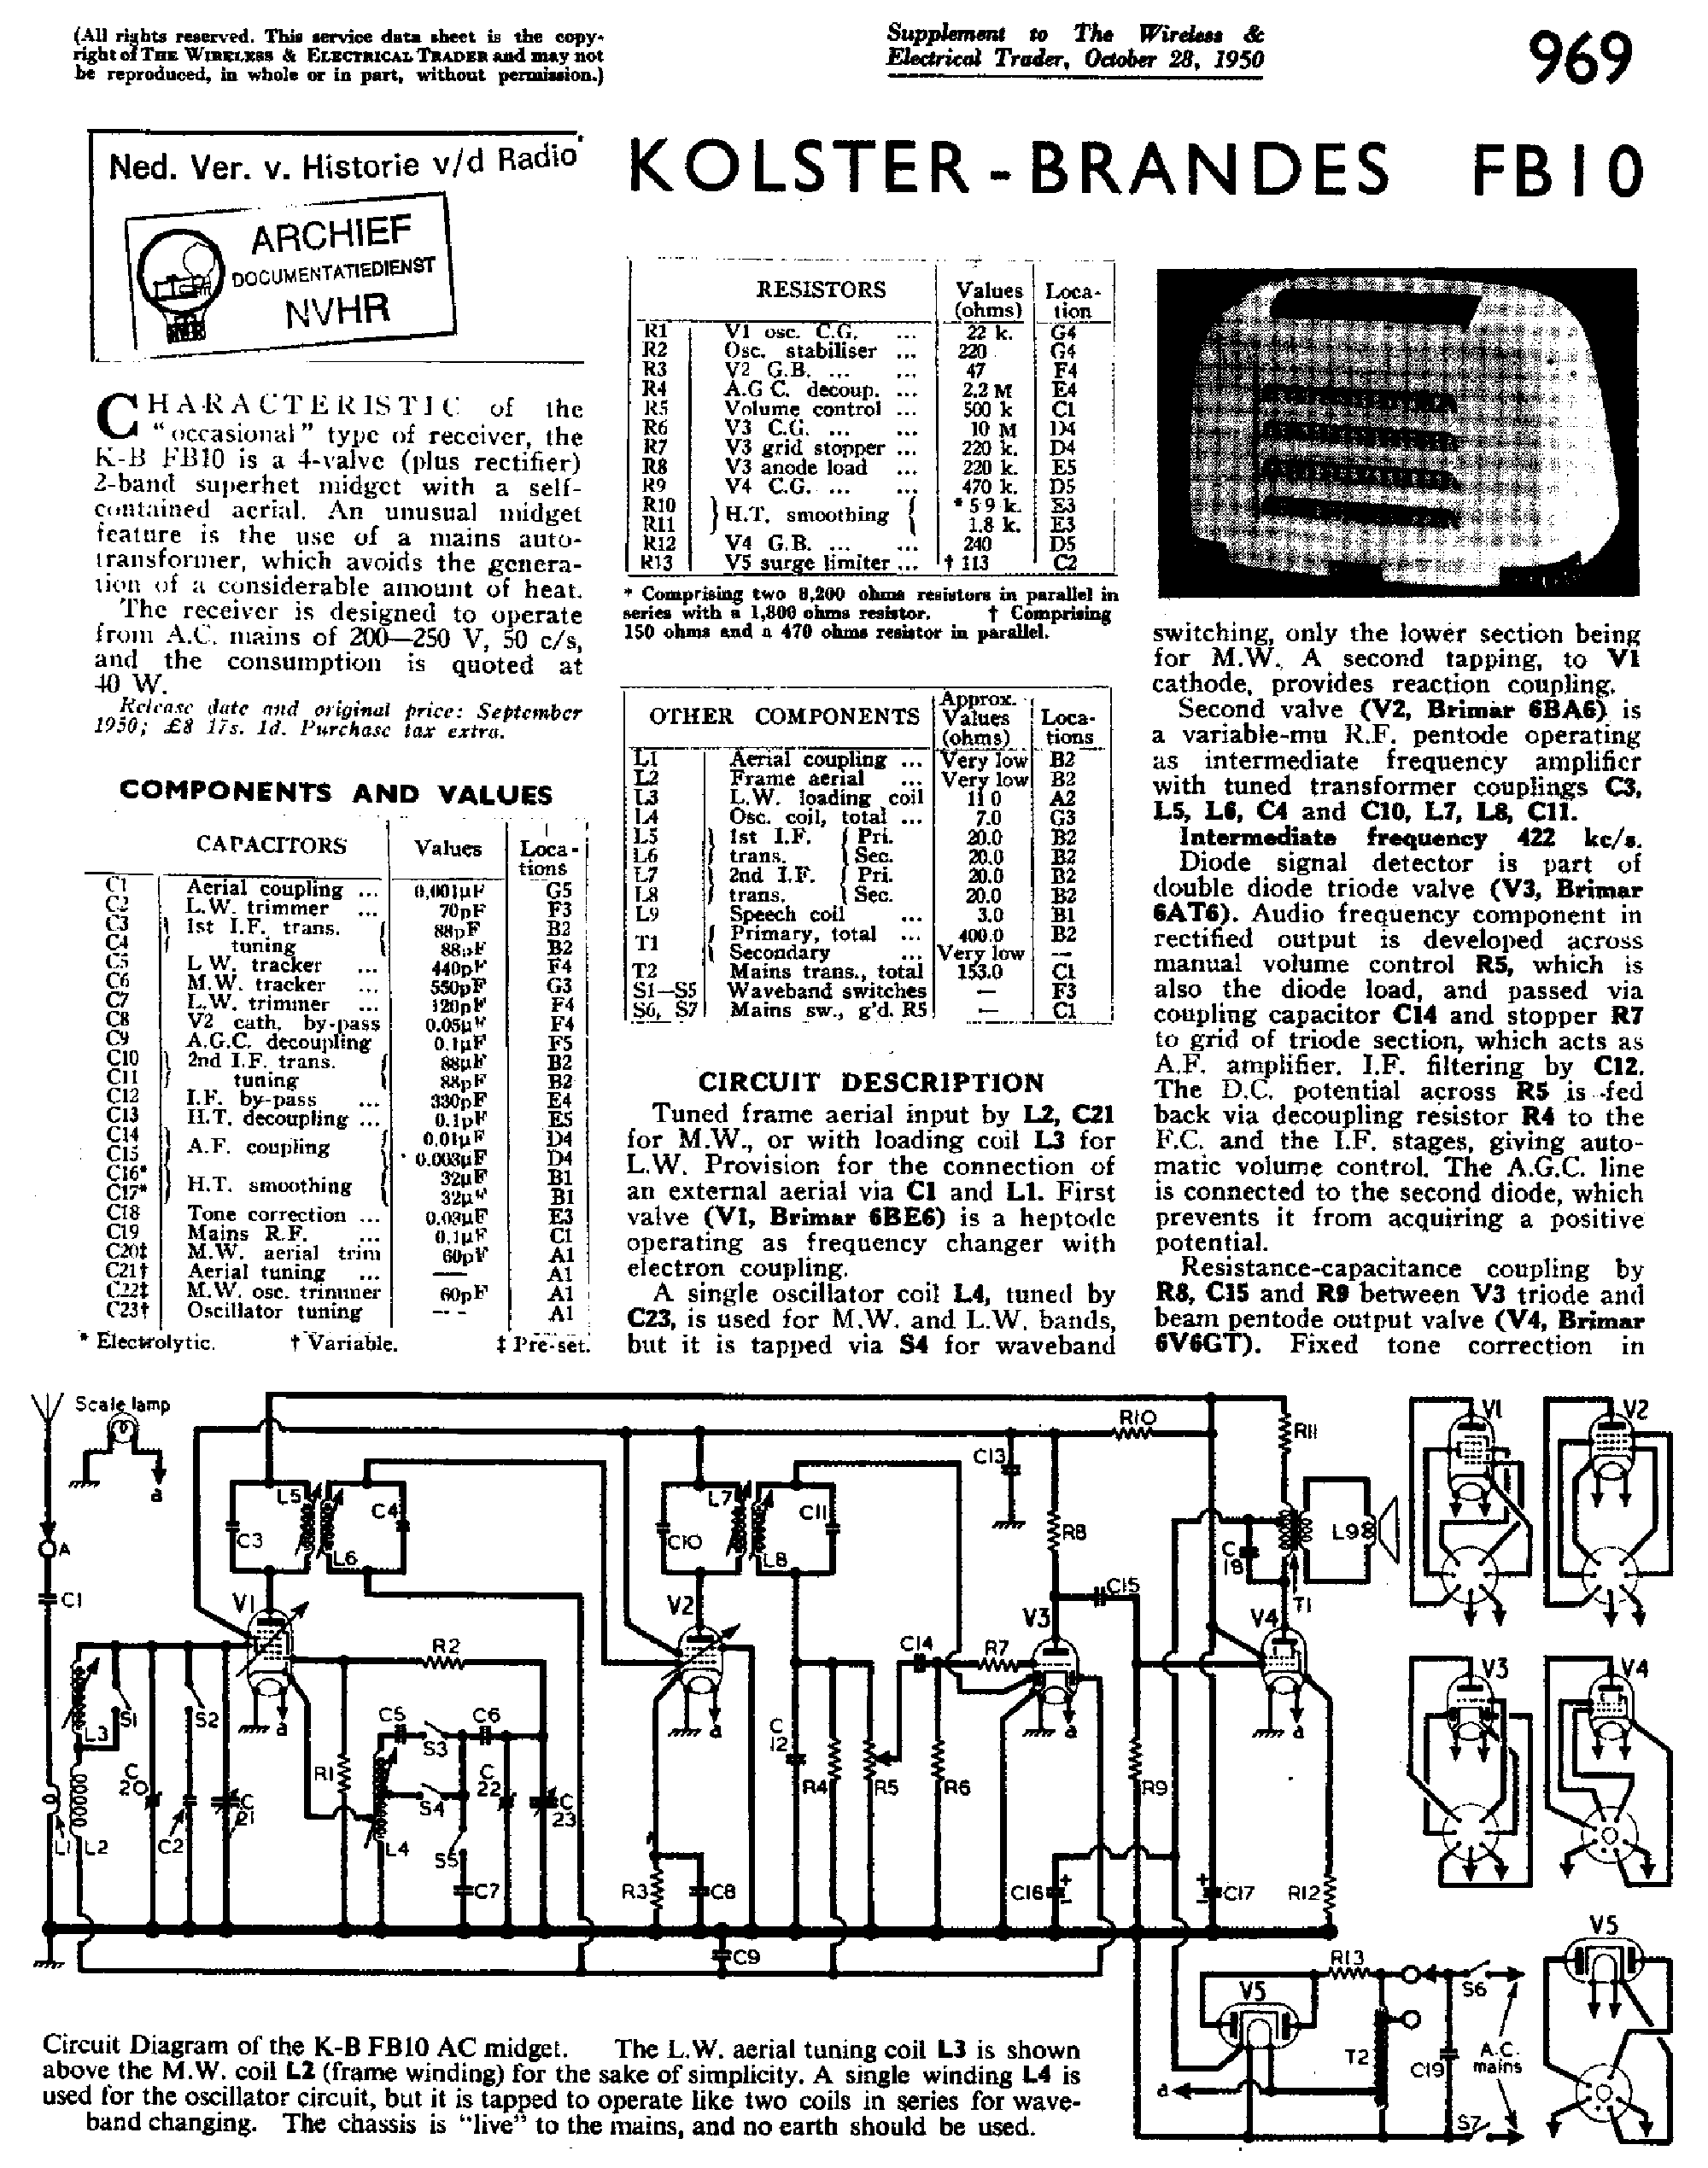 KOLSTER-BRANDES FB10 RECEIVER 1950 SM SCH service manual (1st page)